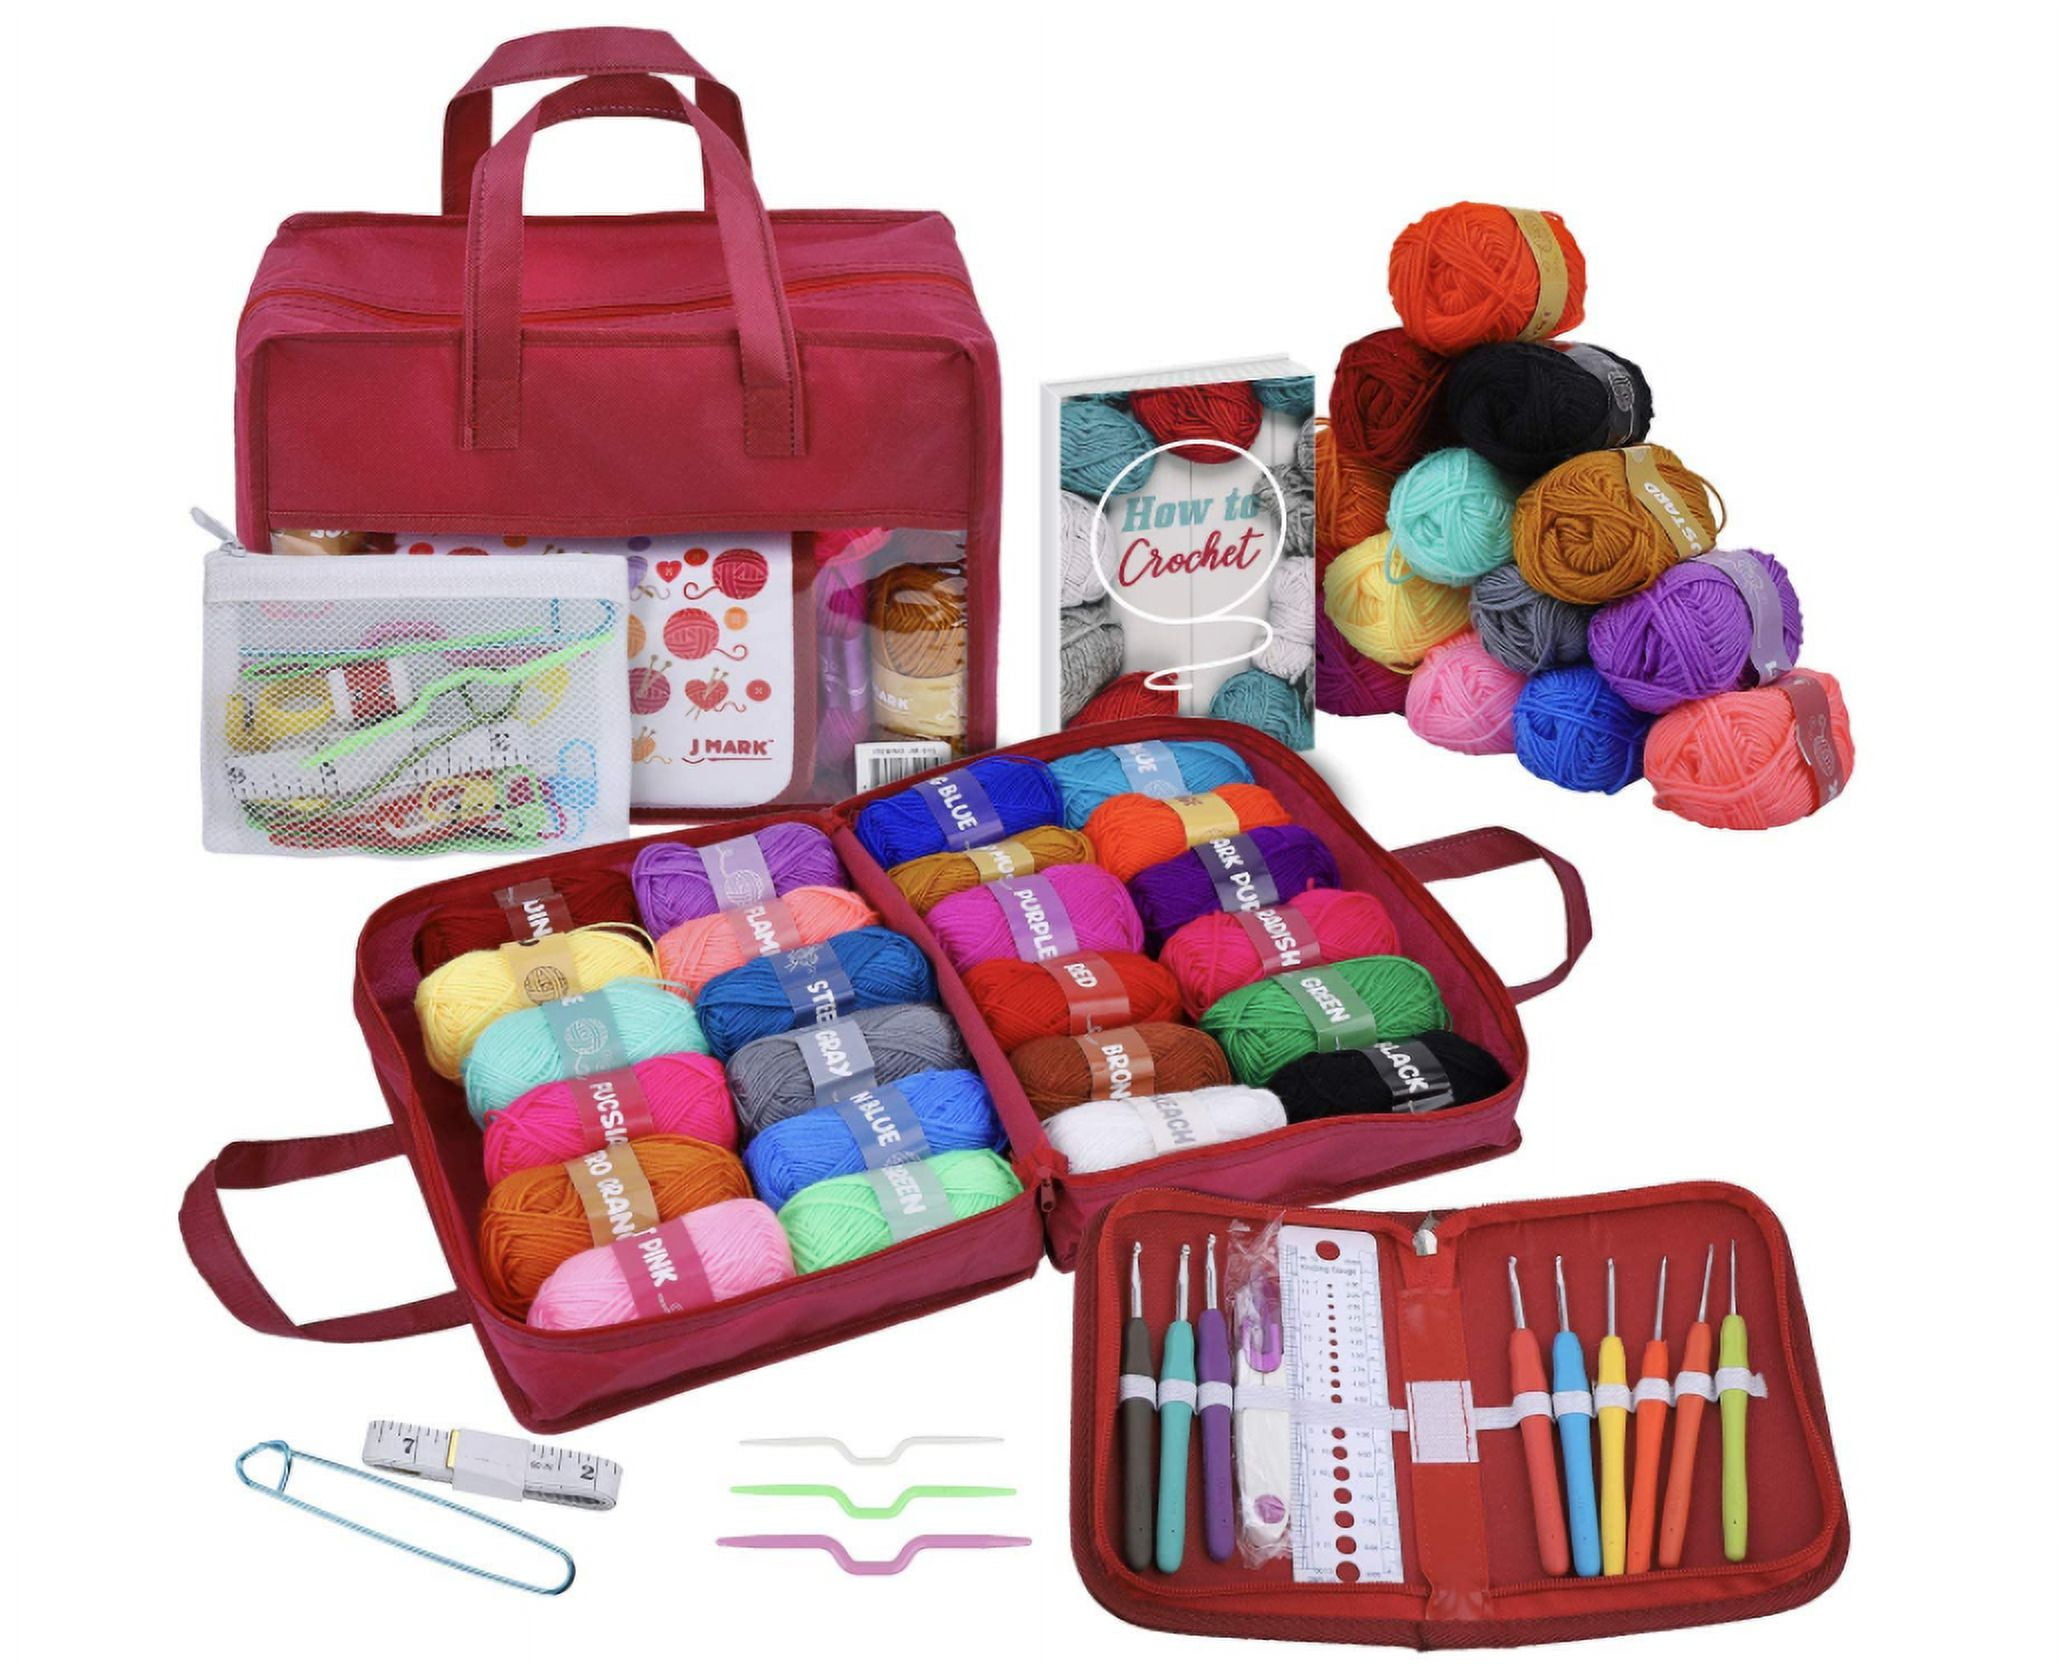  Crochet Kit for Beginners Adults, 84PCS Crochet Set includes 16  Colors Crochet Yarn Balls 15 Sizes Crochet Hooks, Accessories Kit, Crochet  Bag, Crochet Starter Kit for Beginner and Crochet Lover